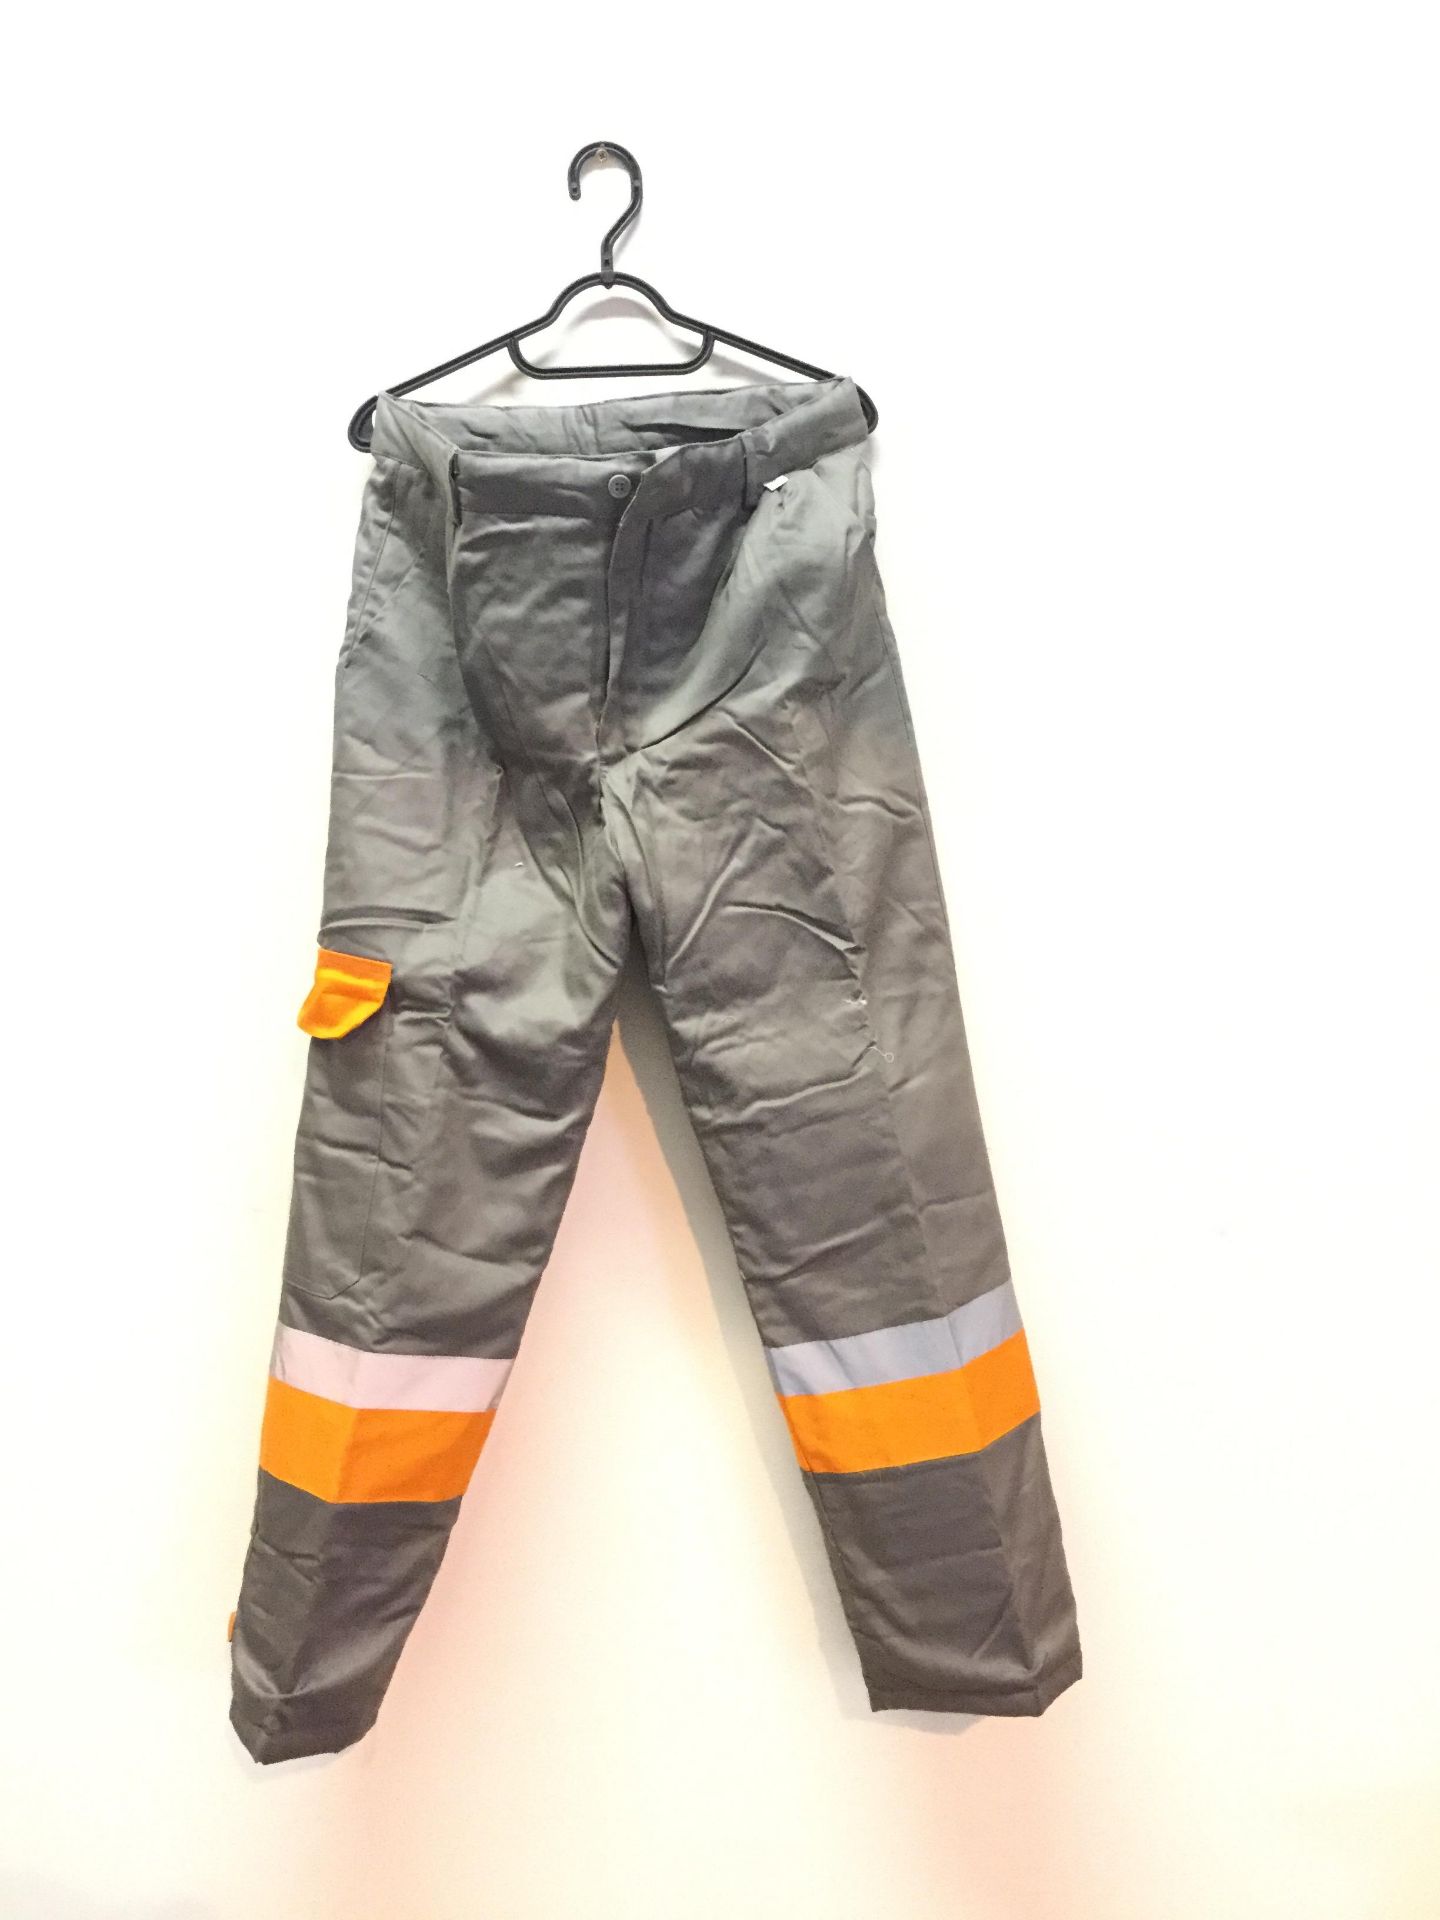 Flame Retardant Winter Trousers - Size 46